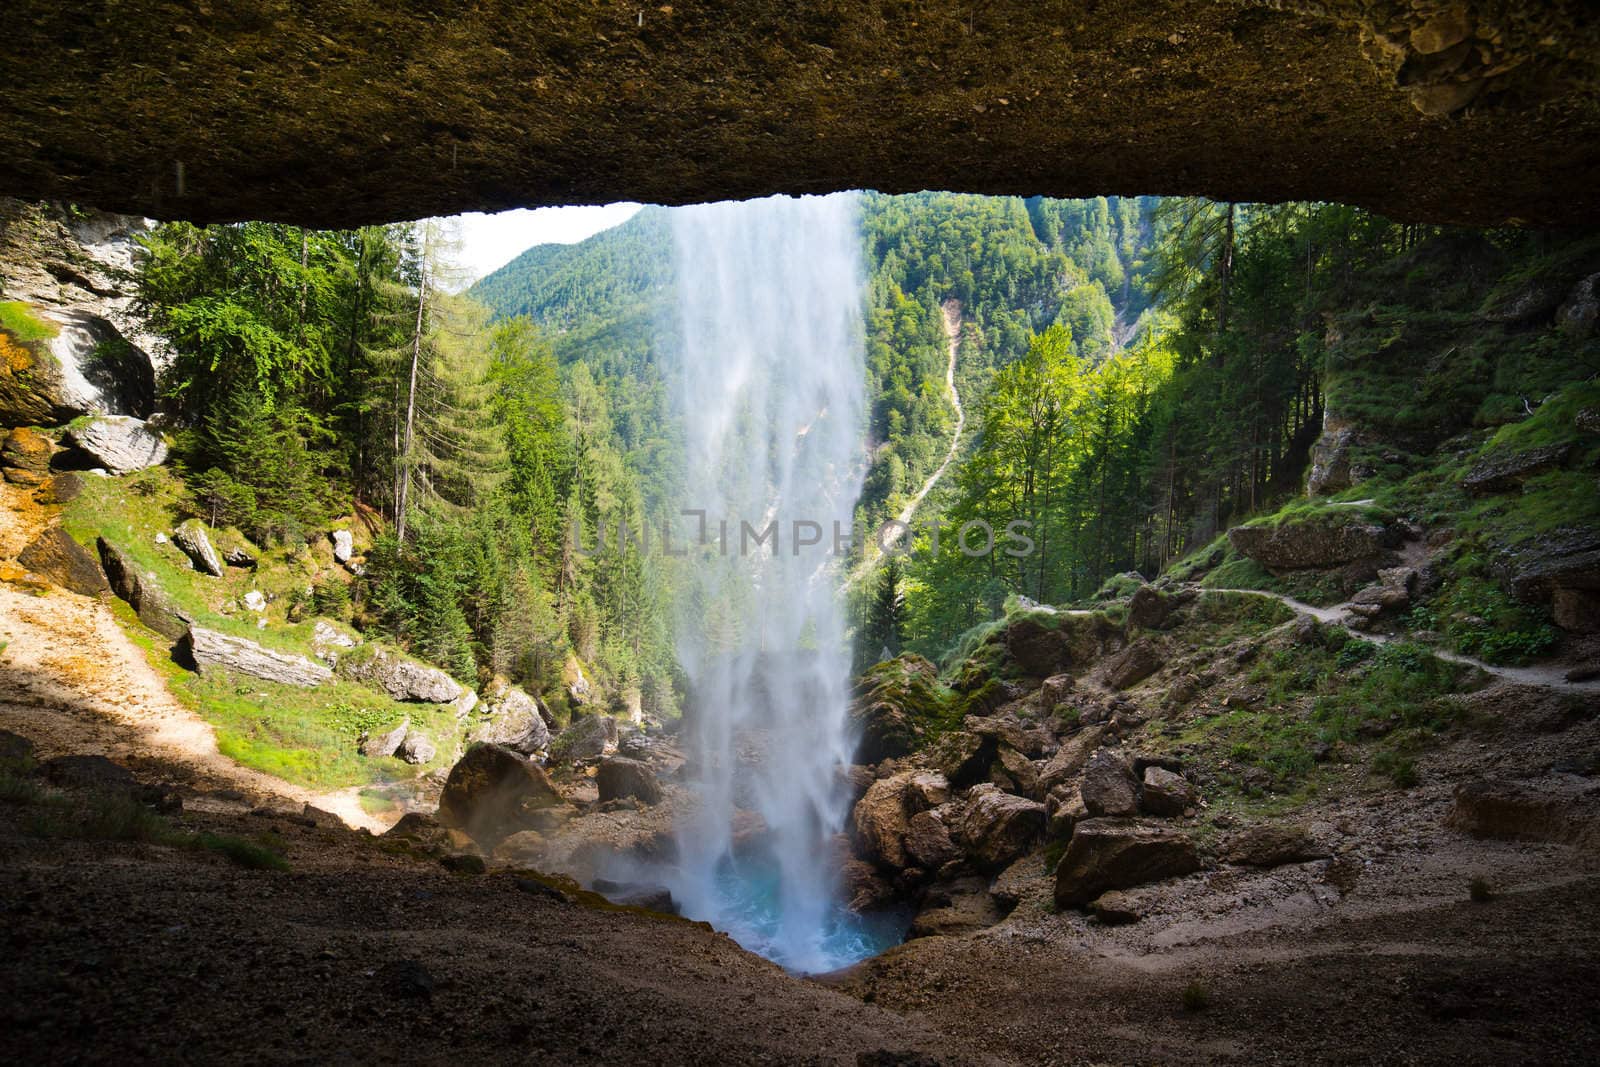 Julian Alps in Slovenia - ultra wide photo behind Pericnik waterfall